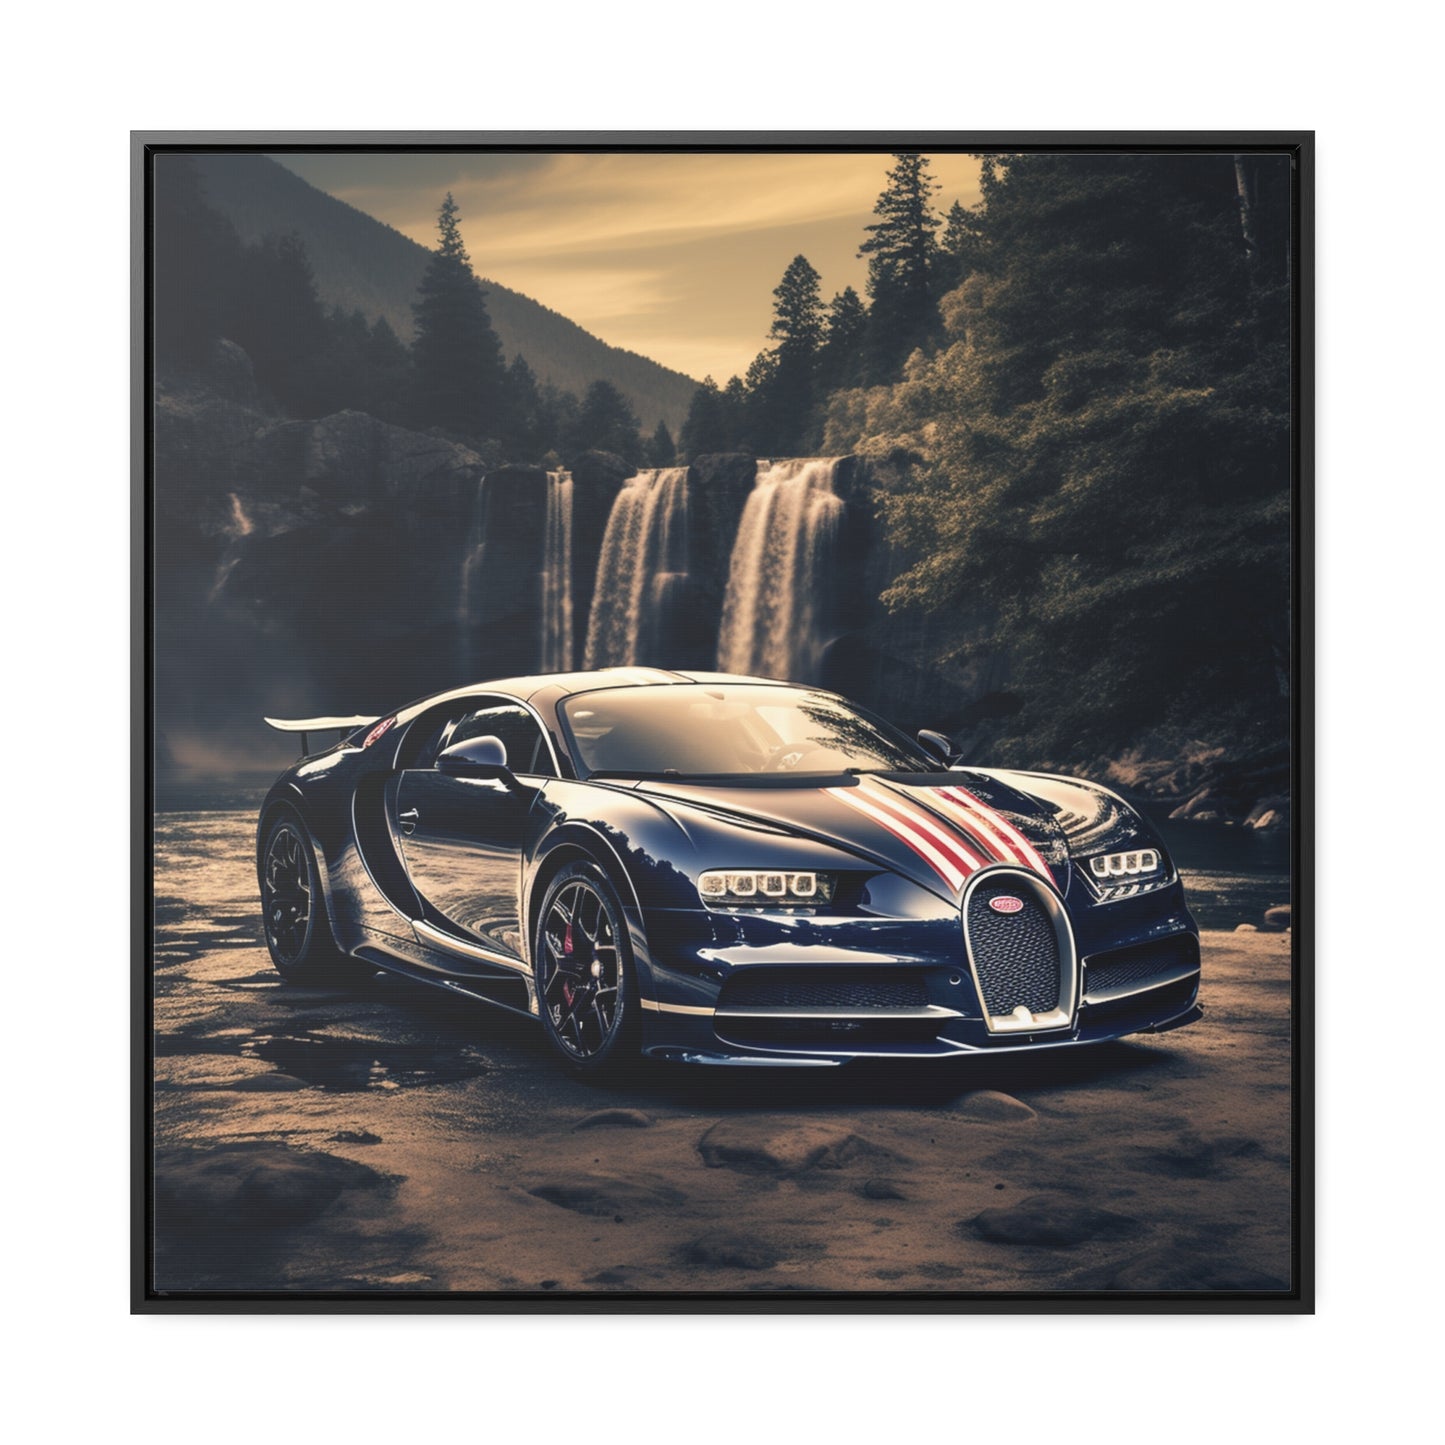 Gallery Canvas Wraps, Square Frame Bugatti Waterfall 2